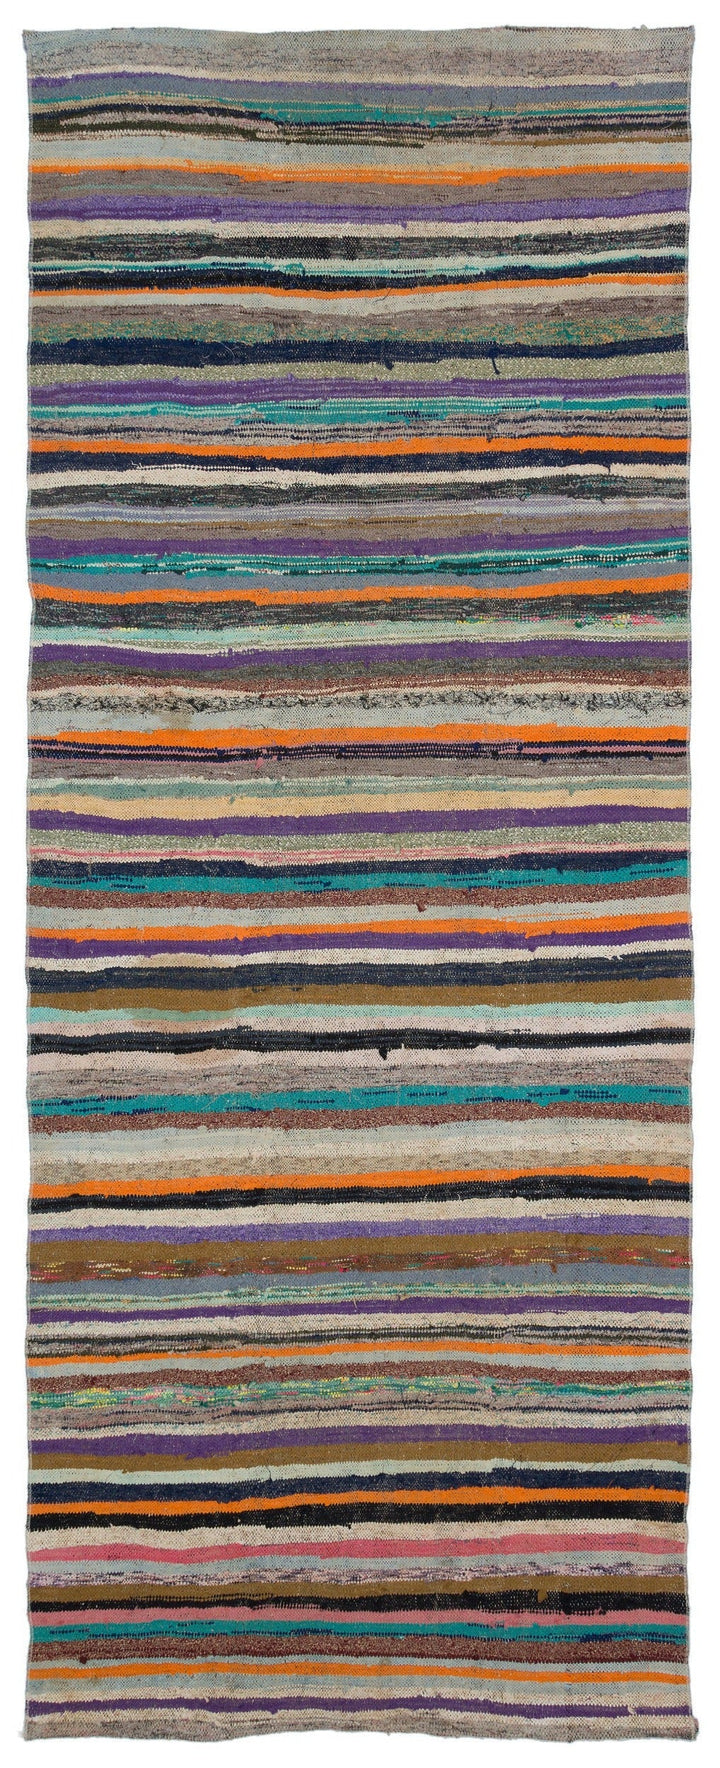 Cretan Beige Striped Wool Hand Woven Carpet 130 x 340